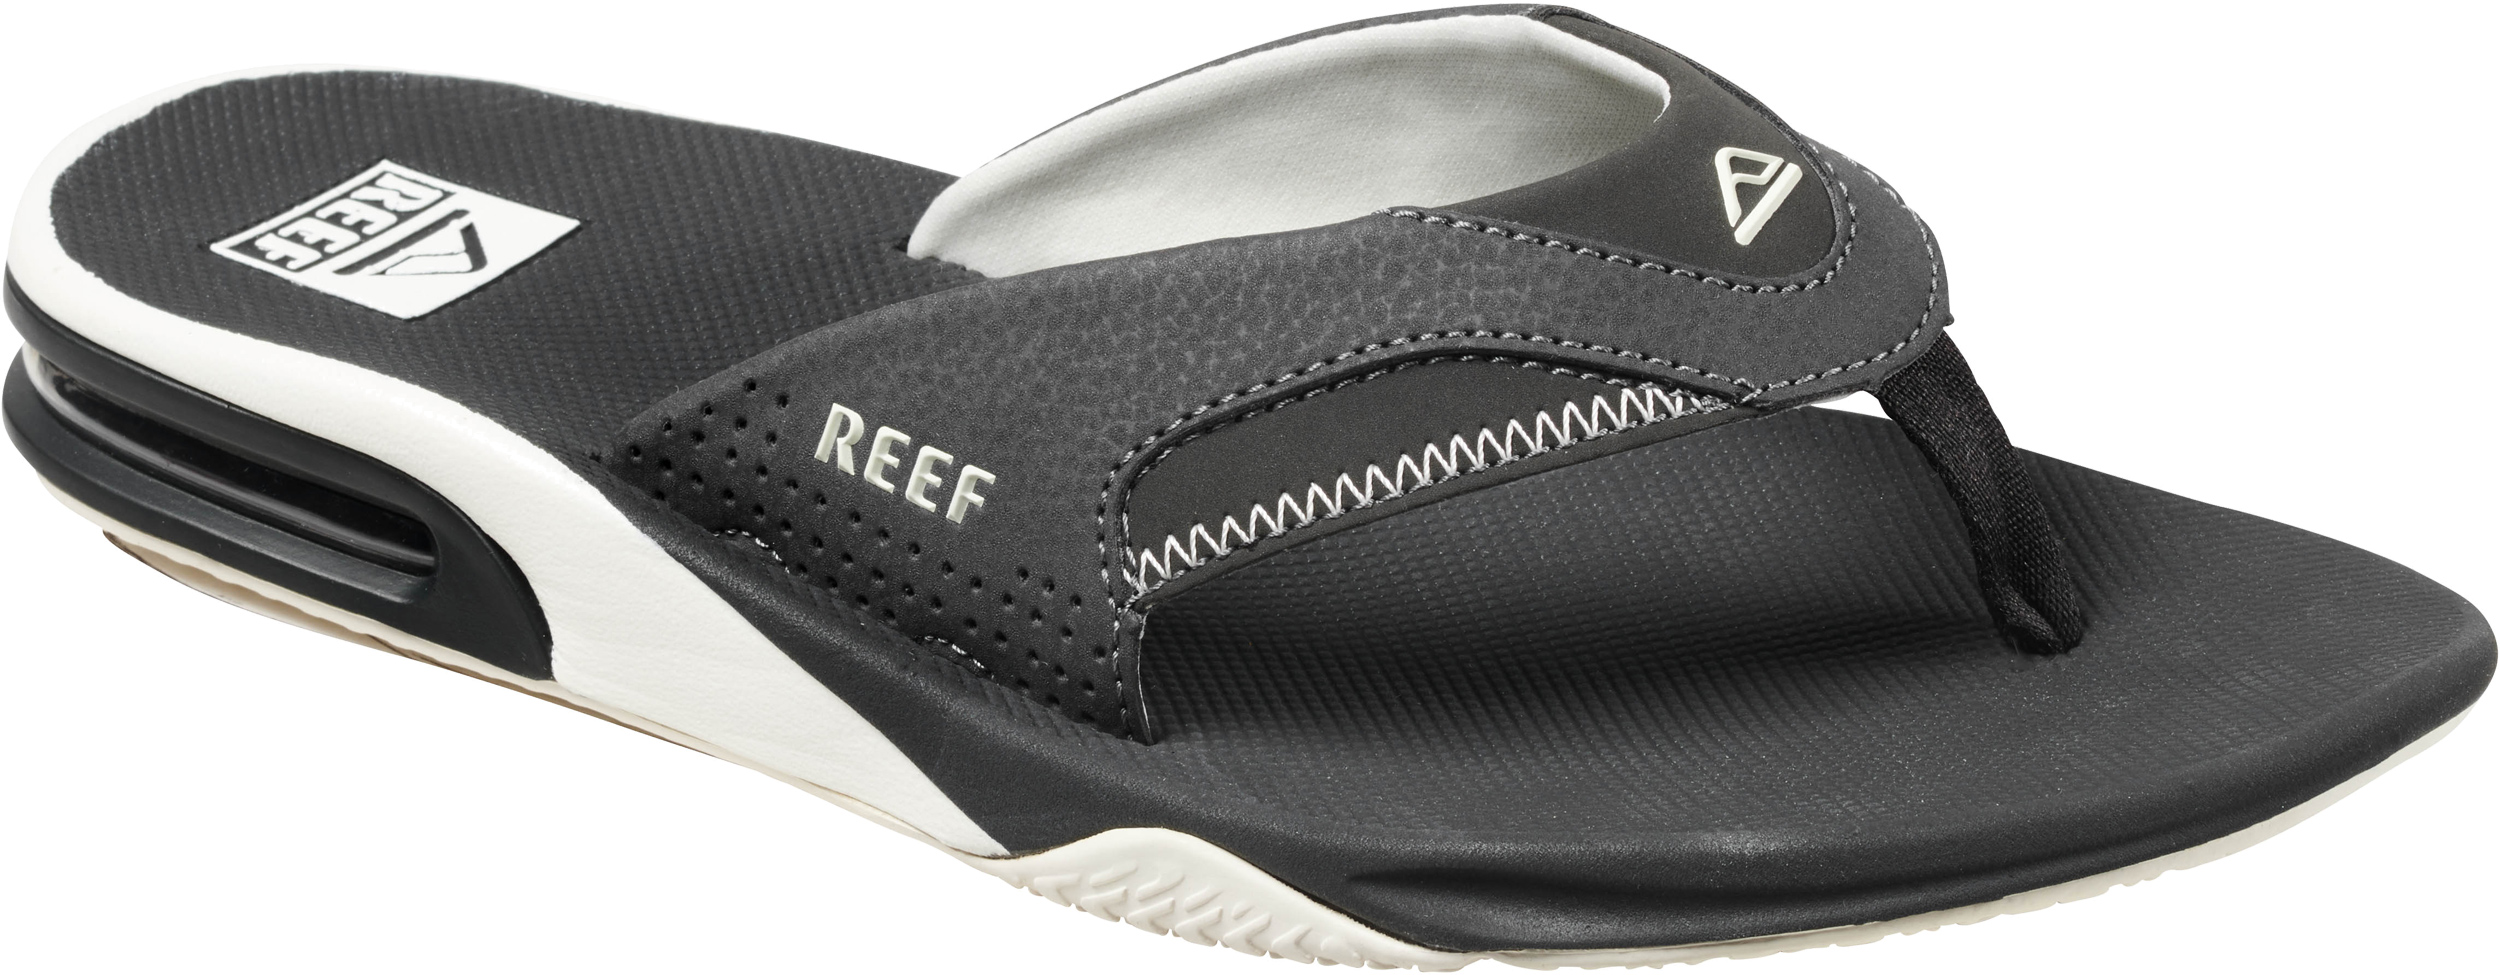 Reef Raven/White Fanning size 9